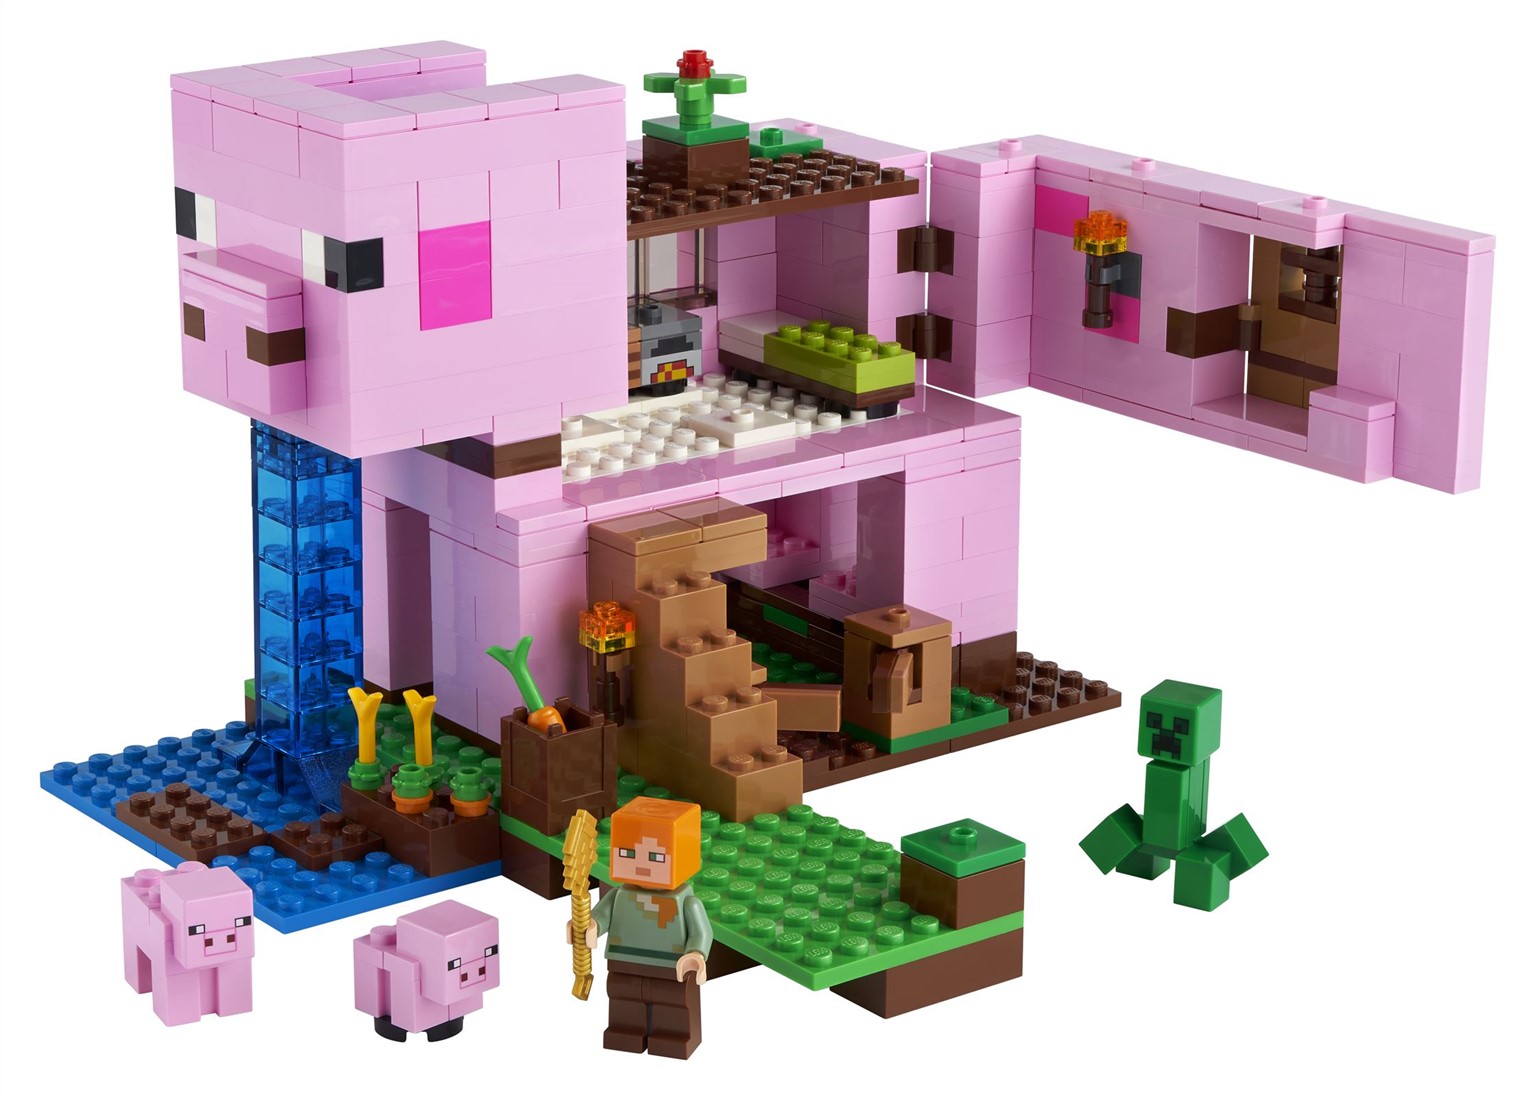 LEGO Minecraft La Maison Cochon - 21170